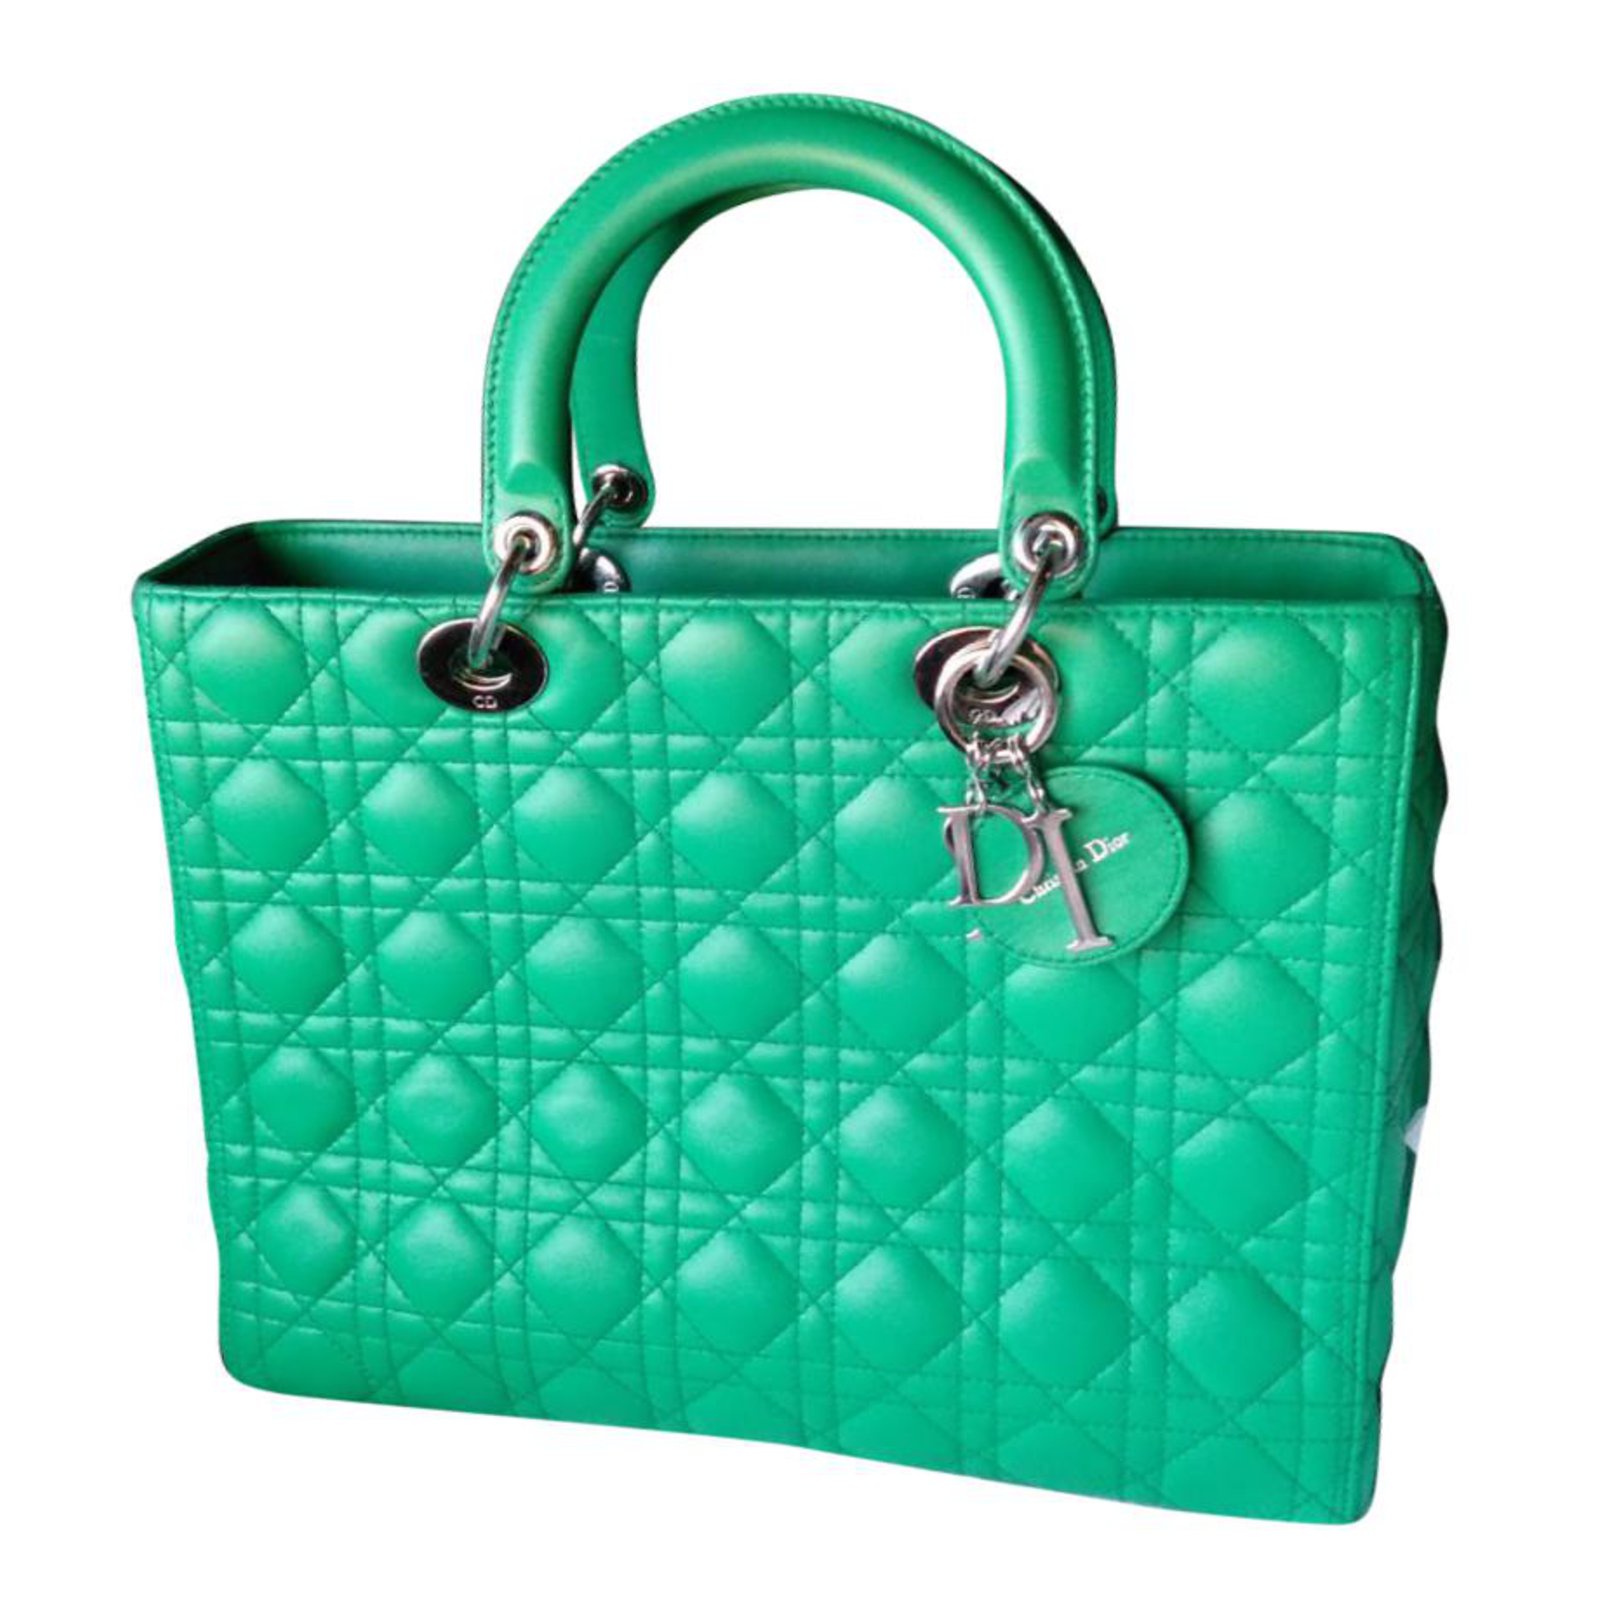 lady dior green bag